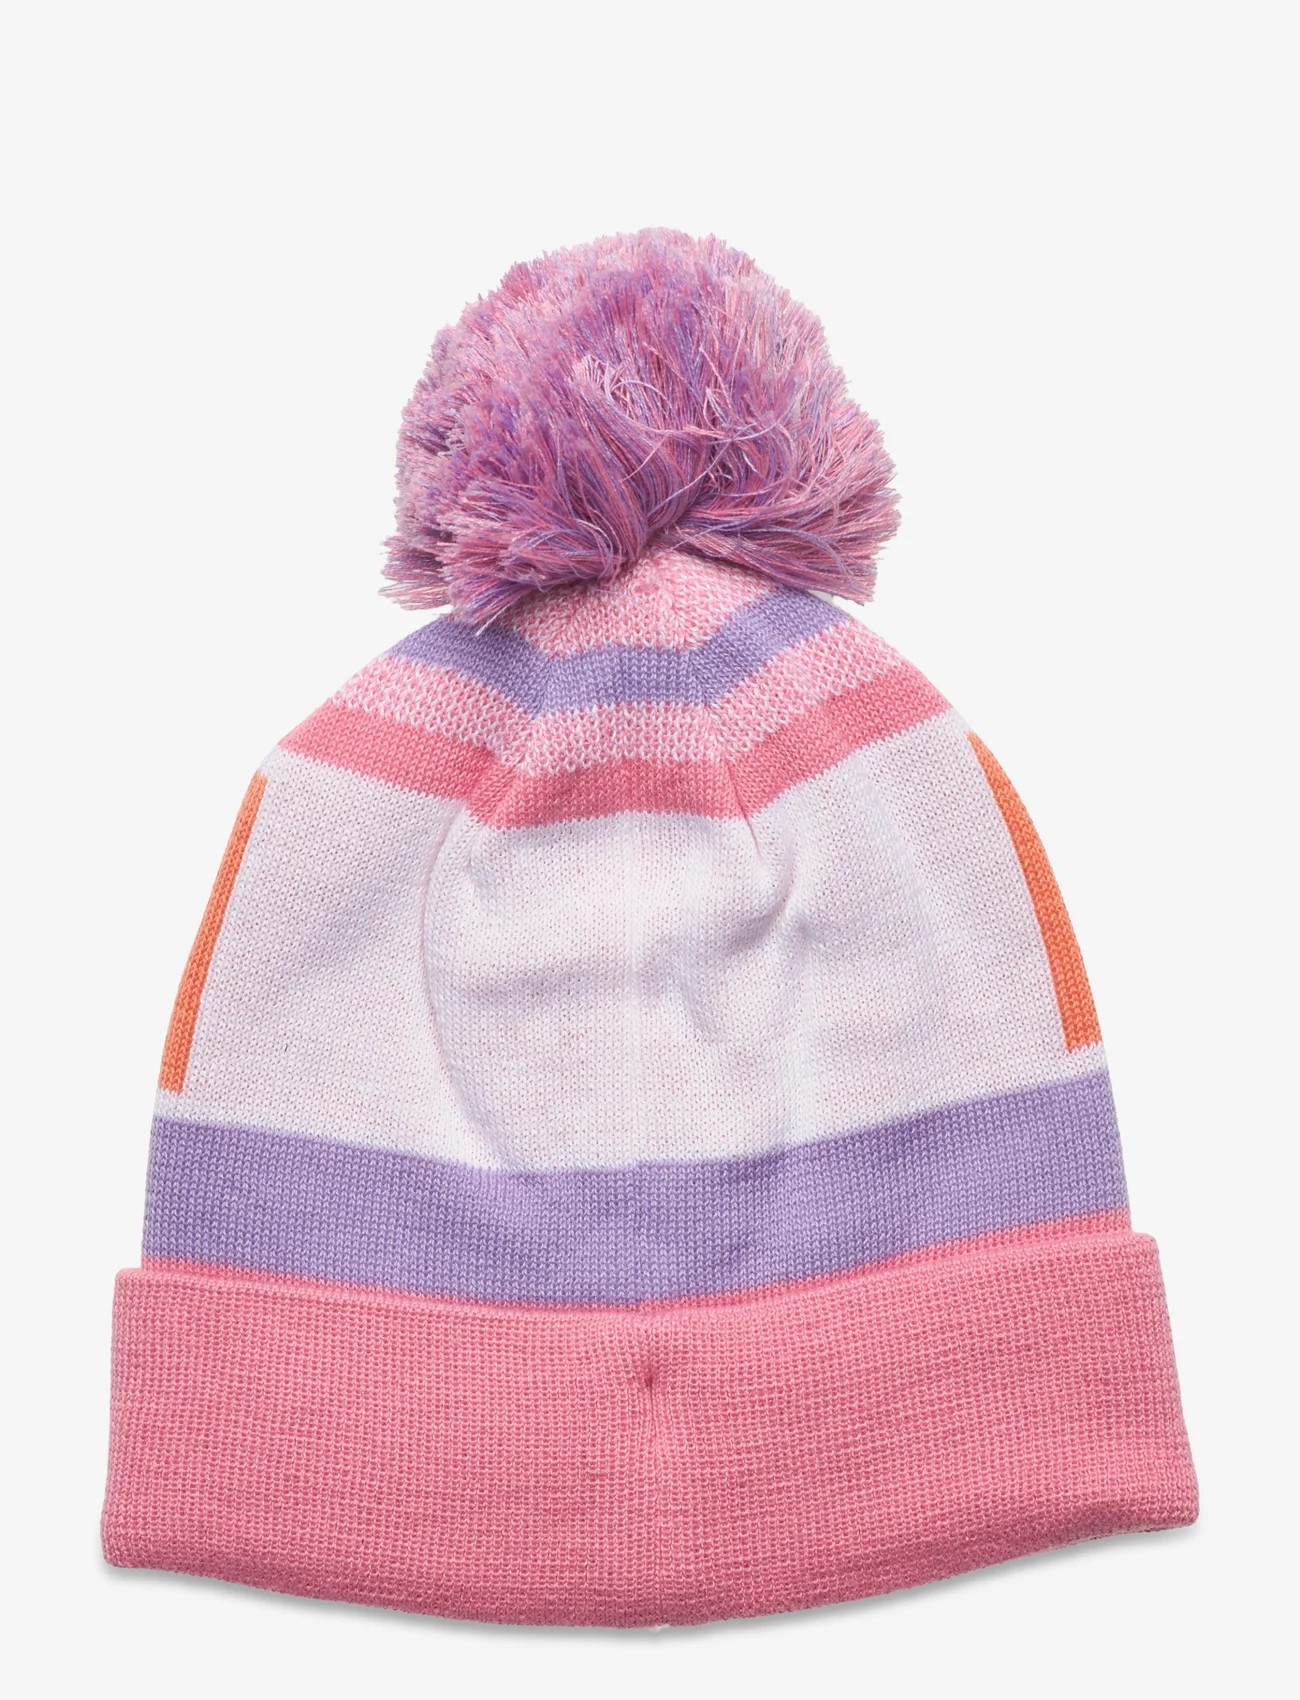 Reima - Kids' beanie Taasko - winter hats - sunset pink - 1